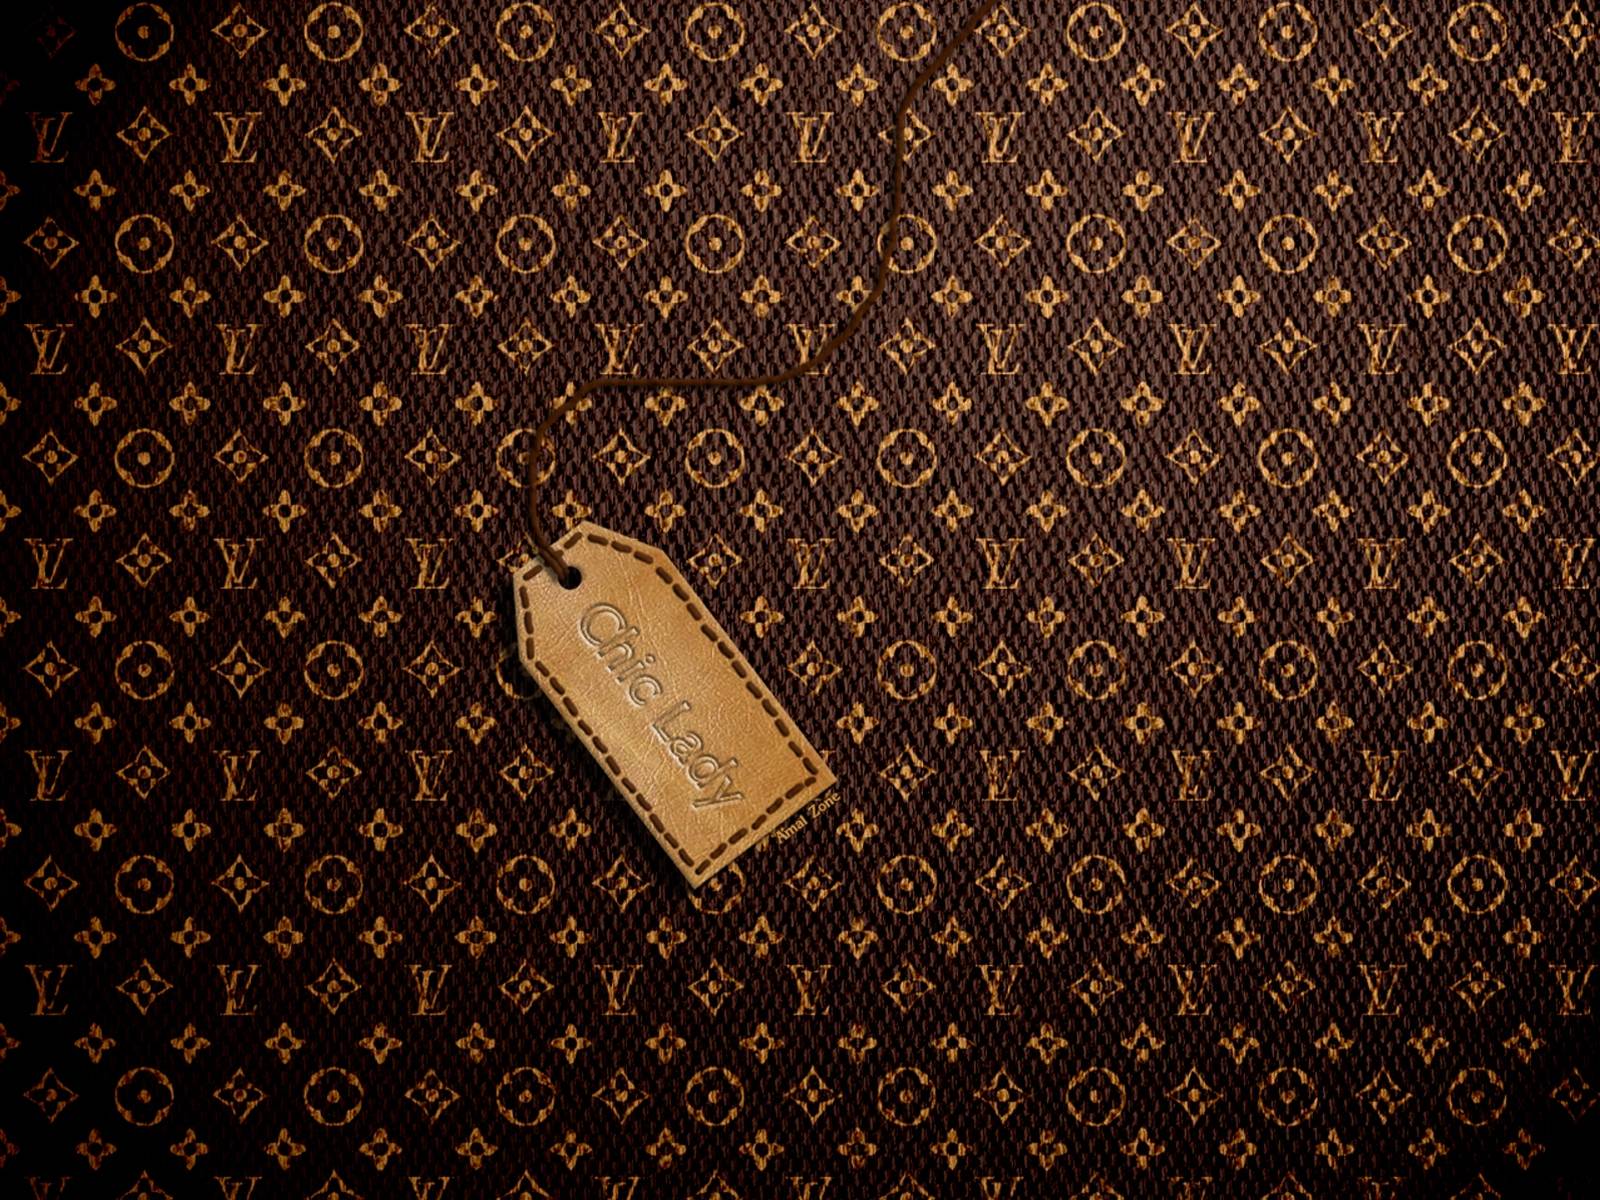 Louis Vuitton Background